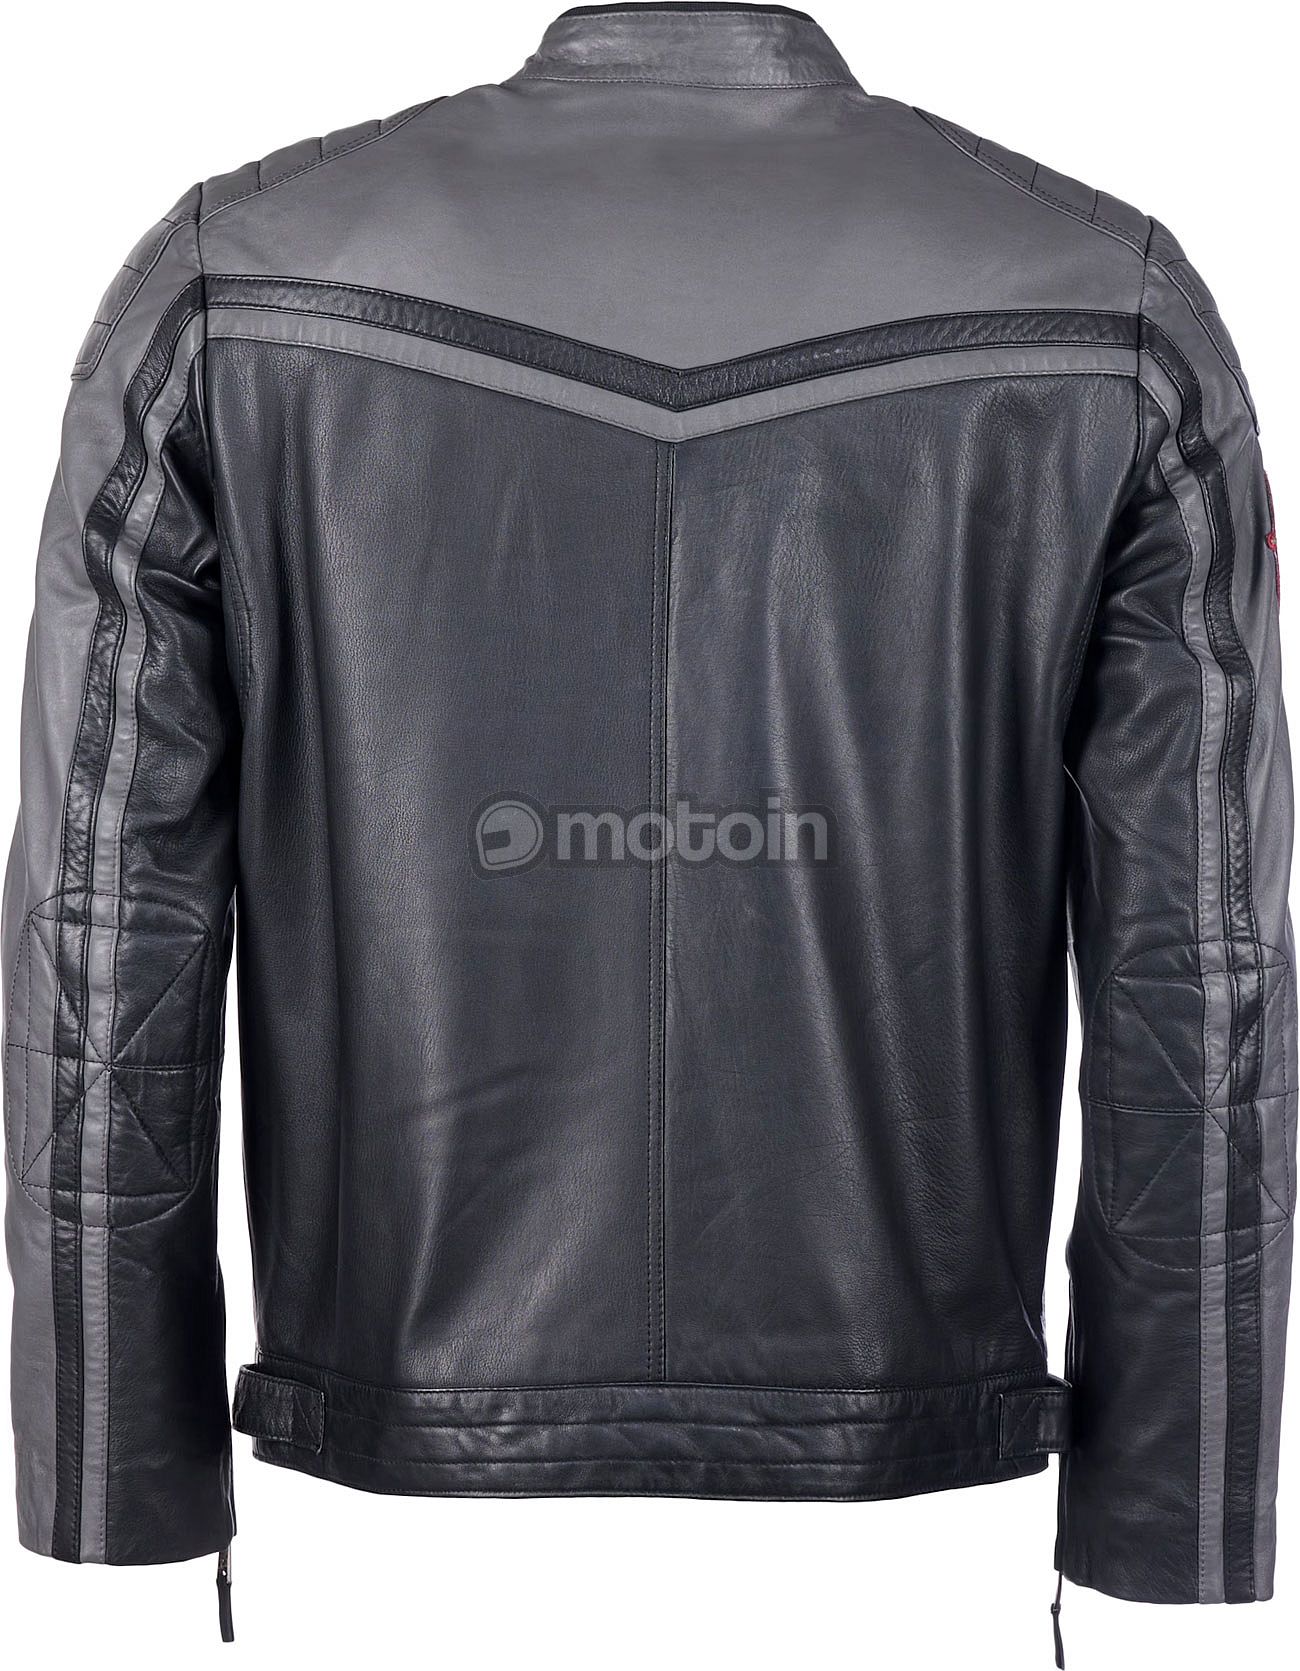 Top Gun leather jacket Racing